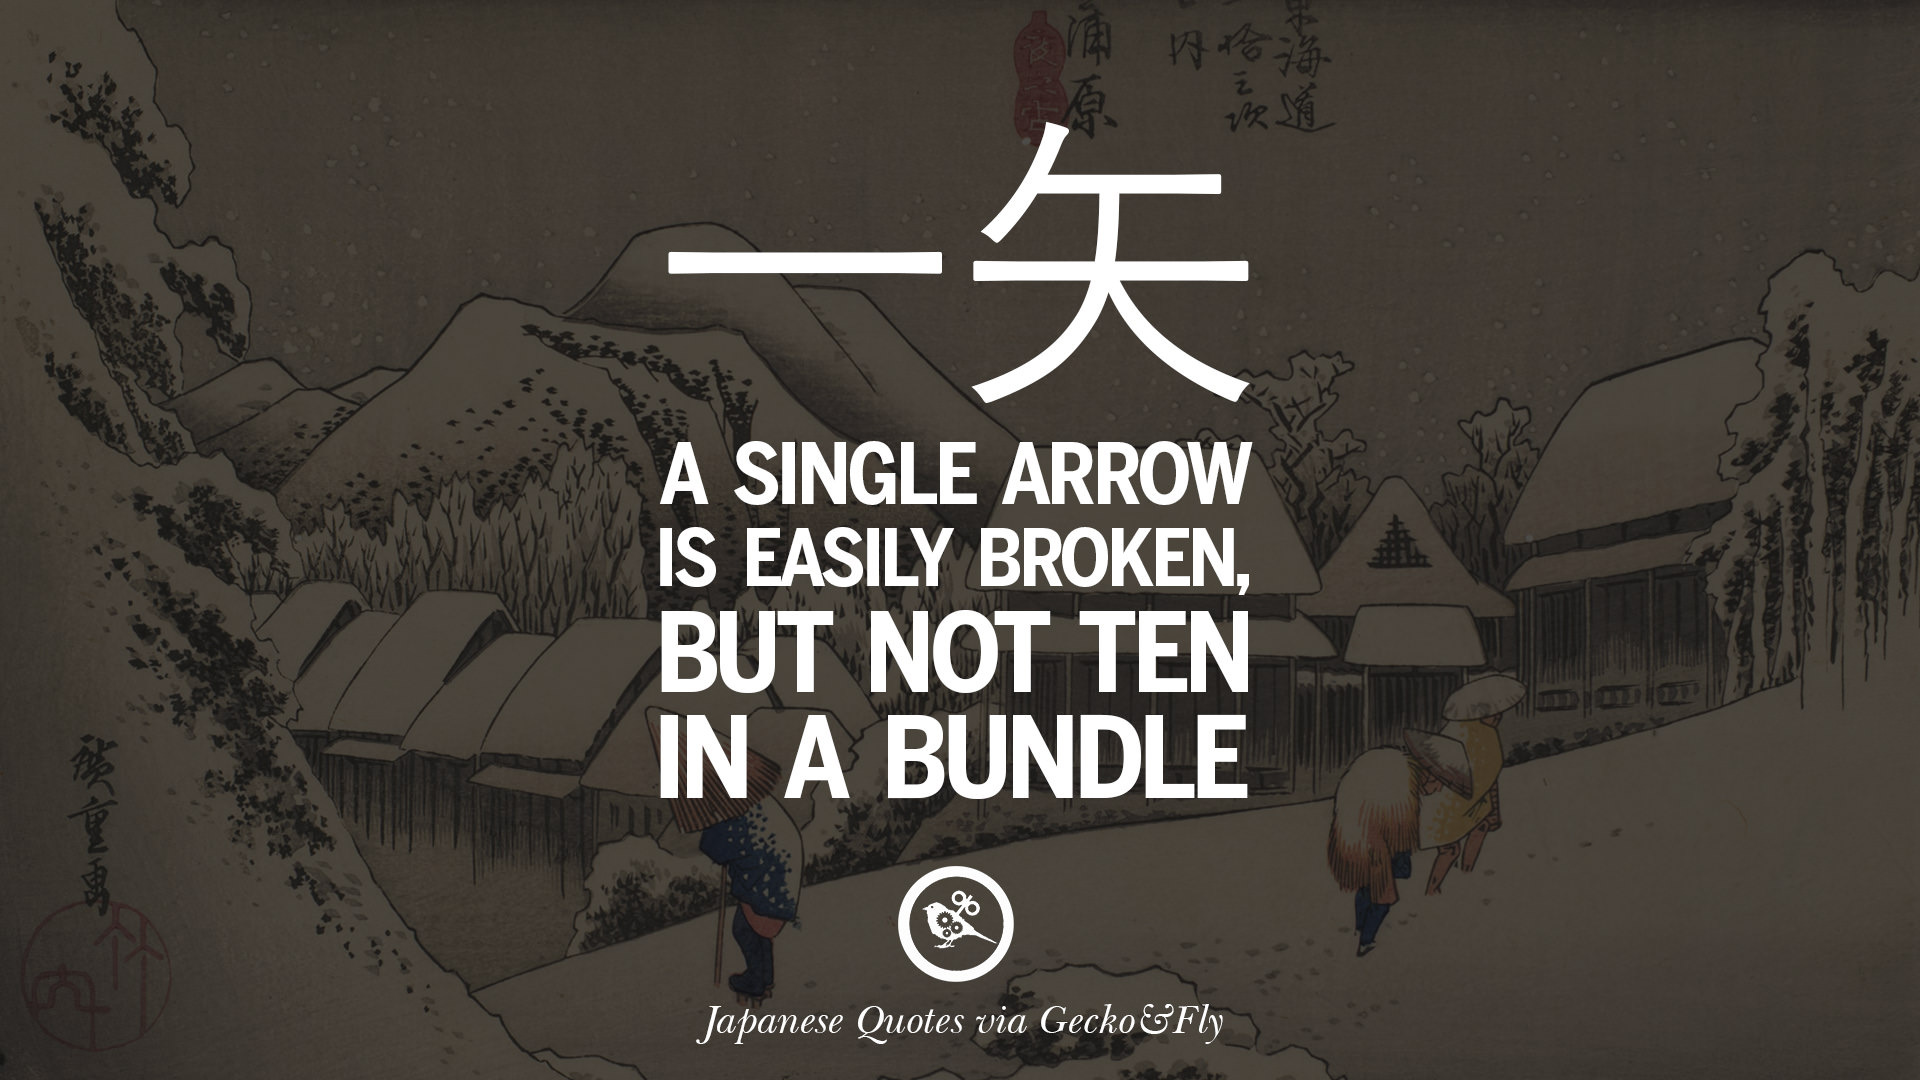 japanese proverbs